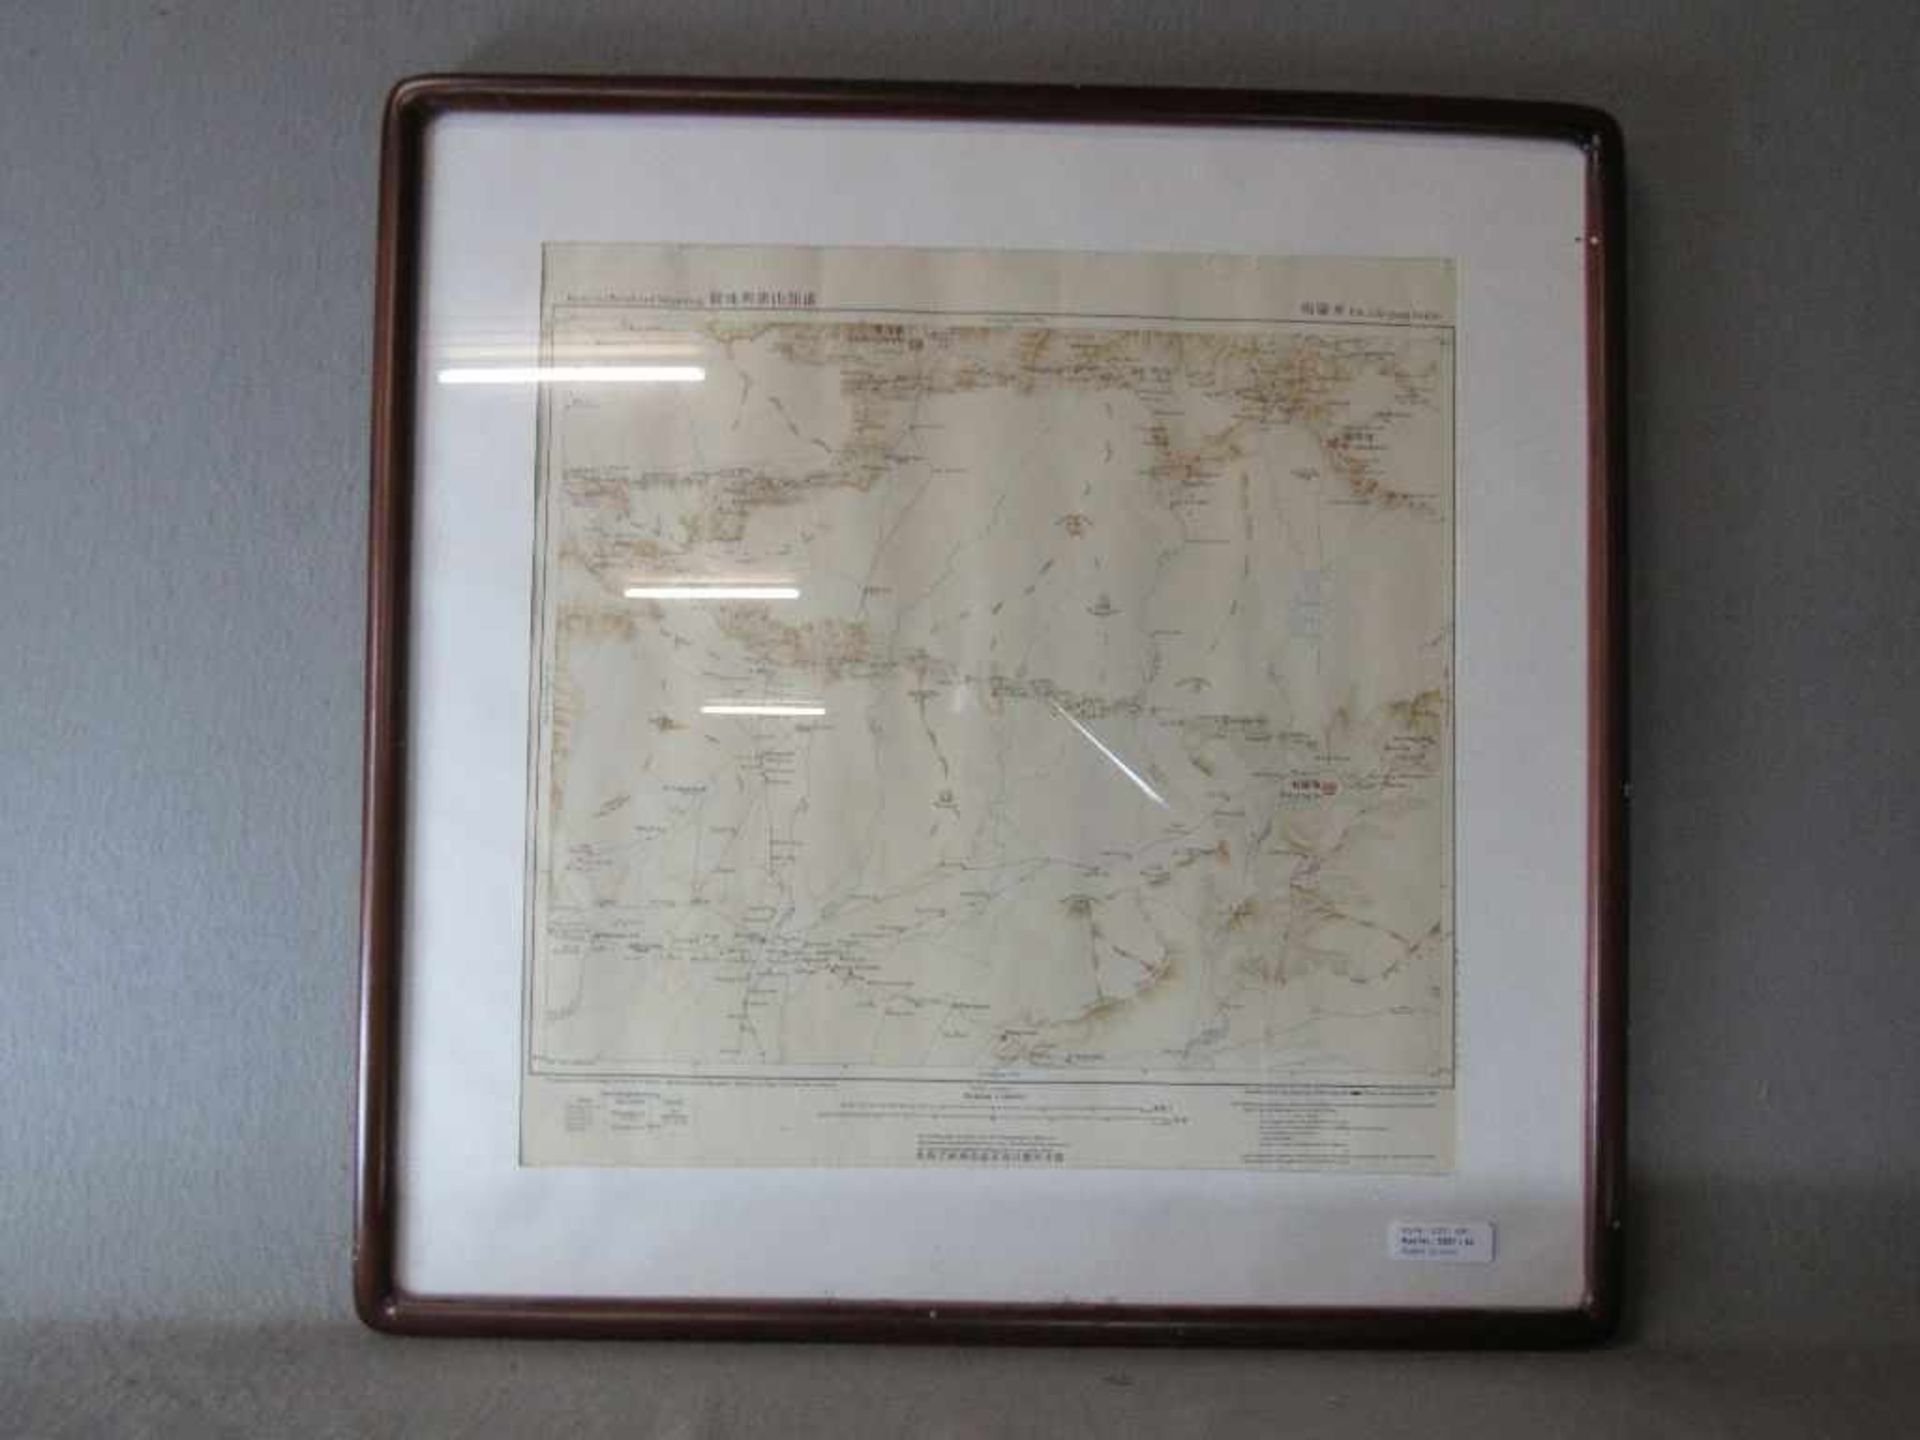 Landkarte gerahmt antik asiatisch 63x62cm- - -20.00 % buyer's premium on the hammer price19.00 % VAT